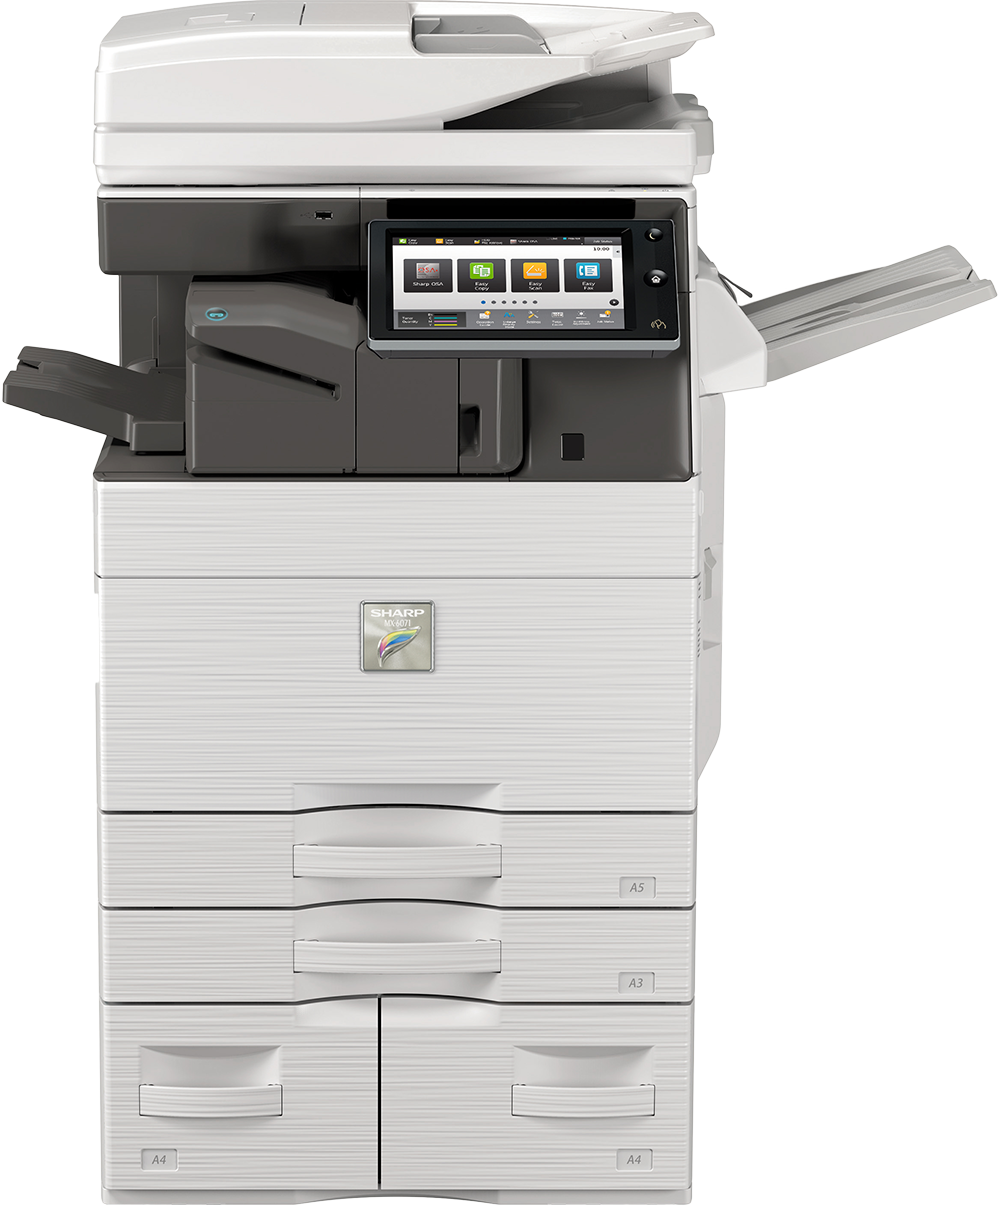 Sharp multifunction printer
